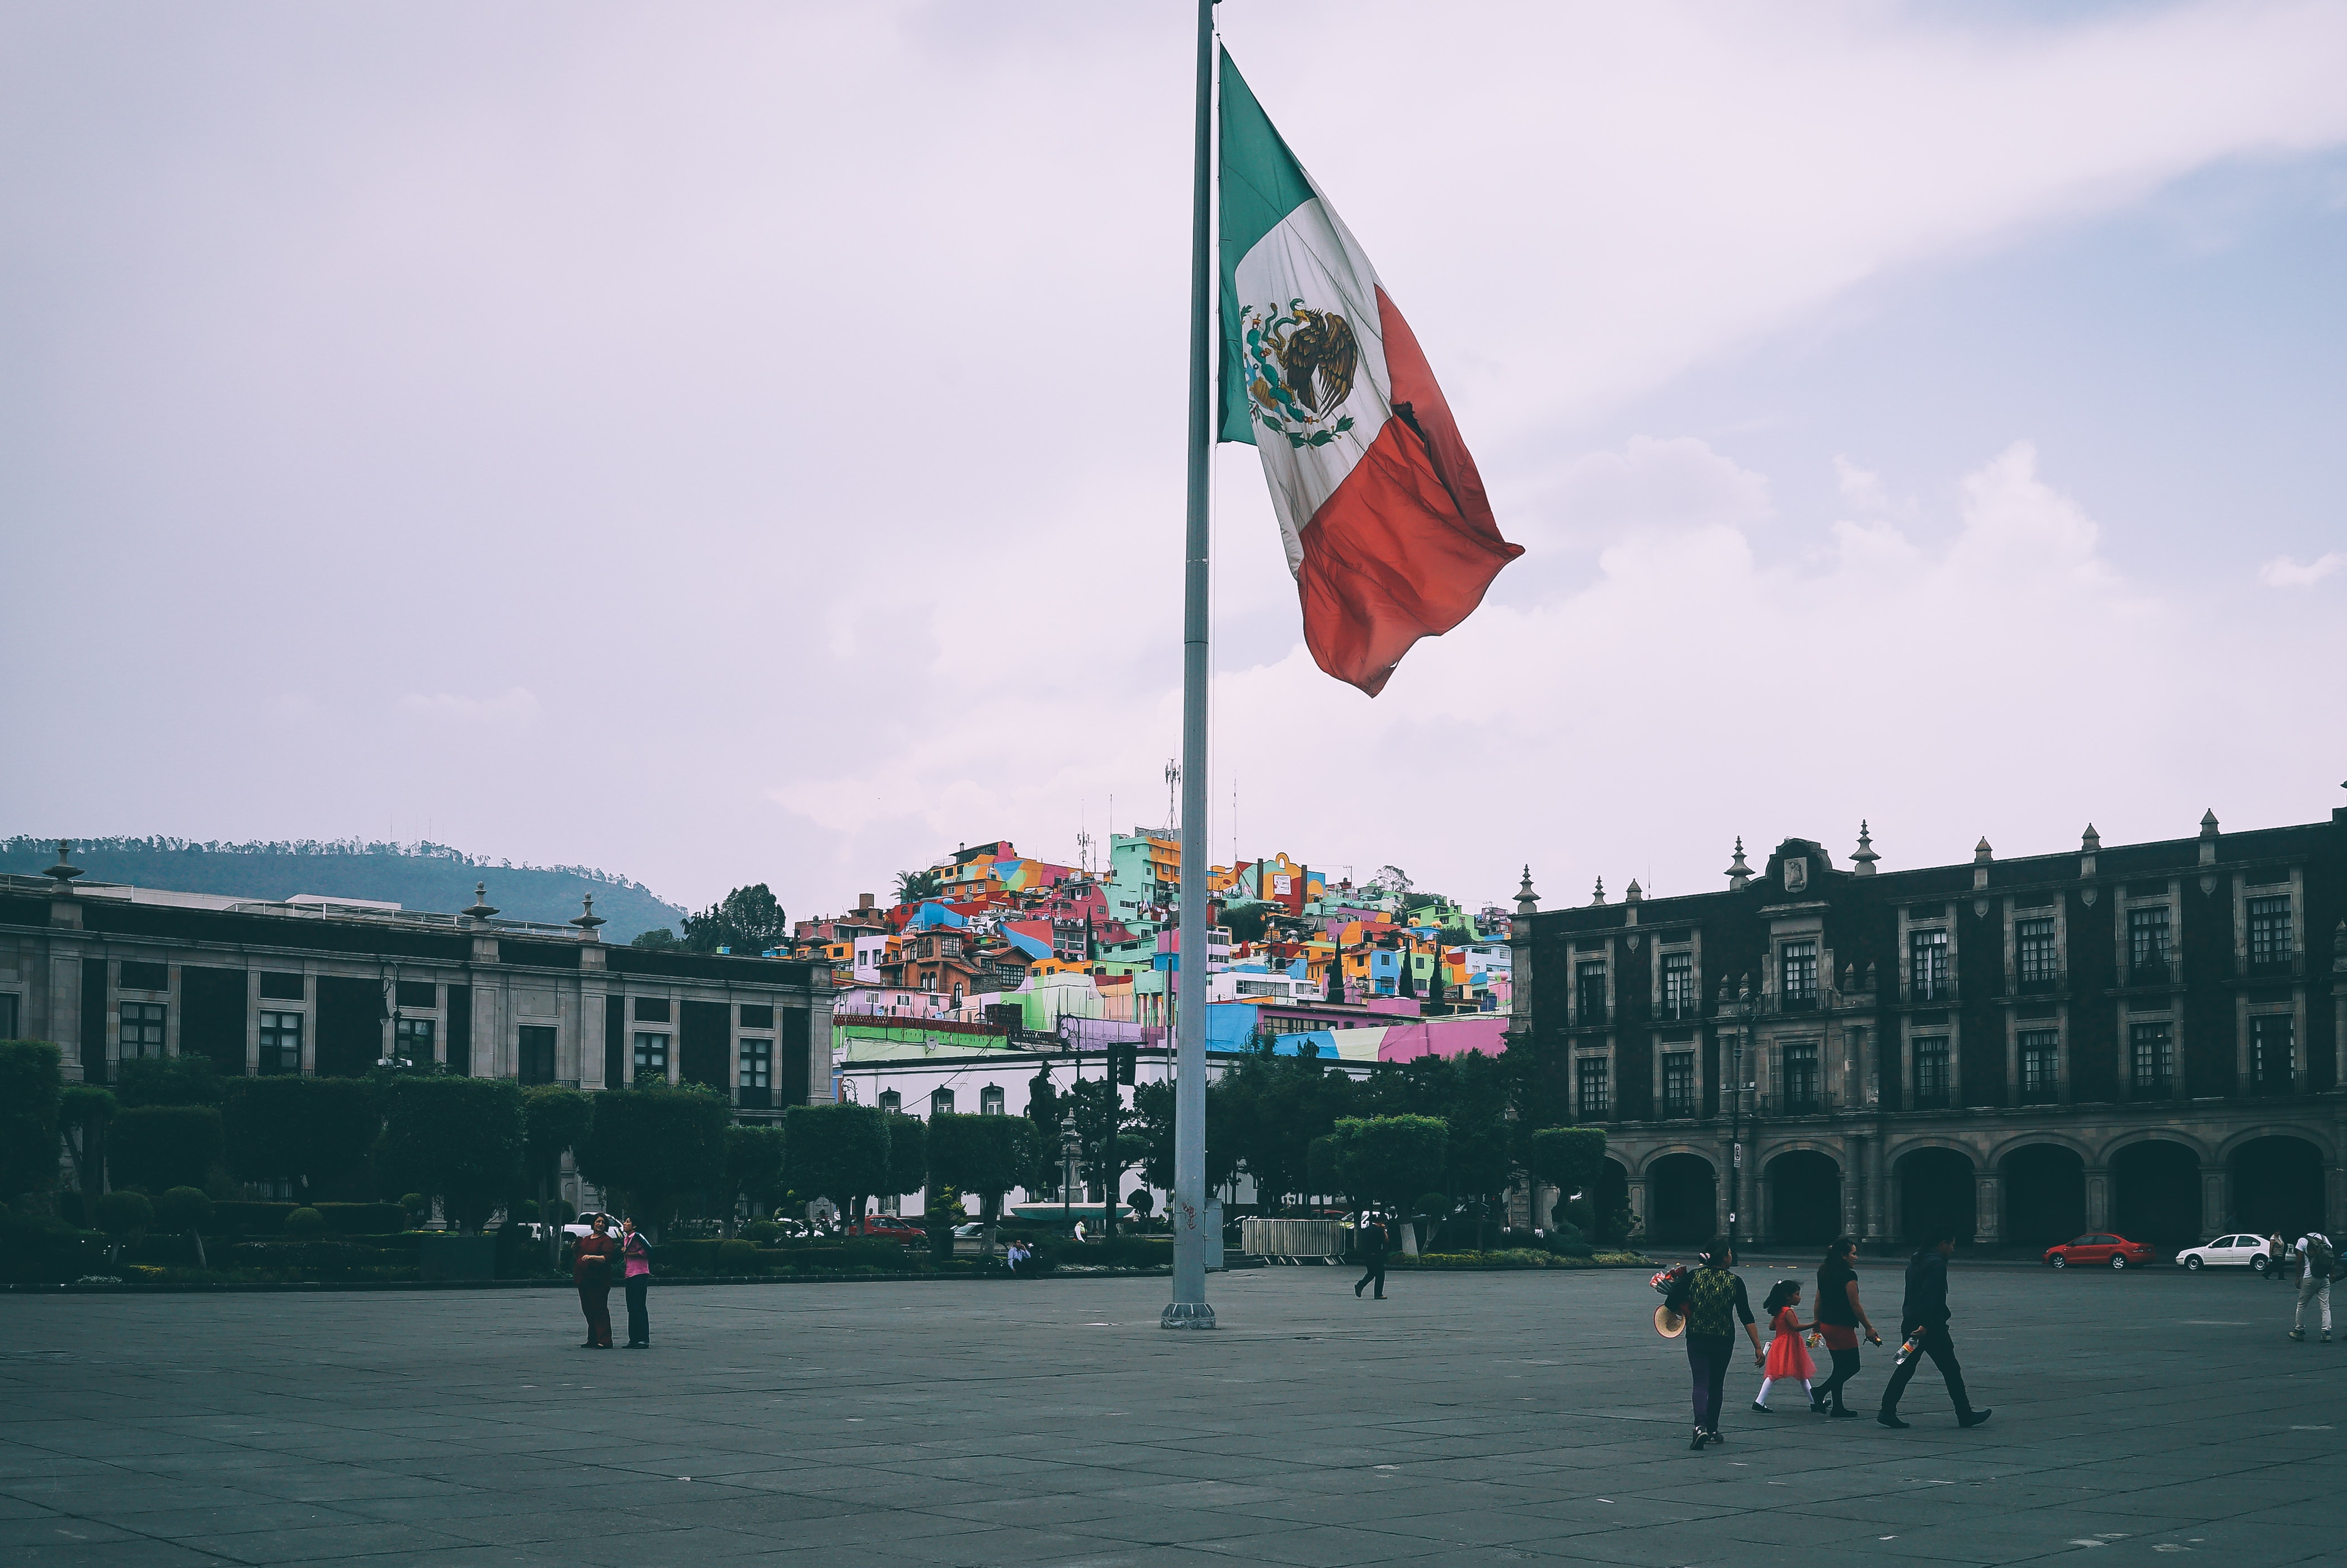 City of Mexico